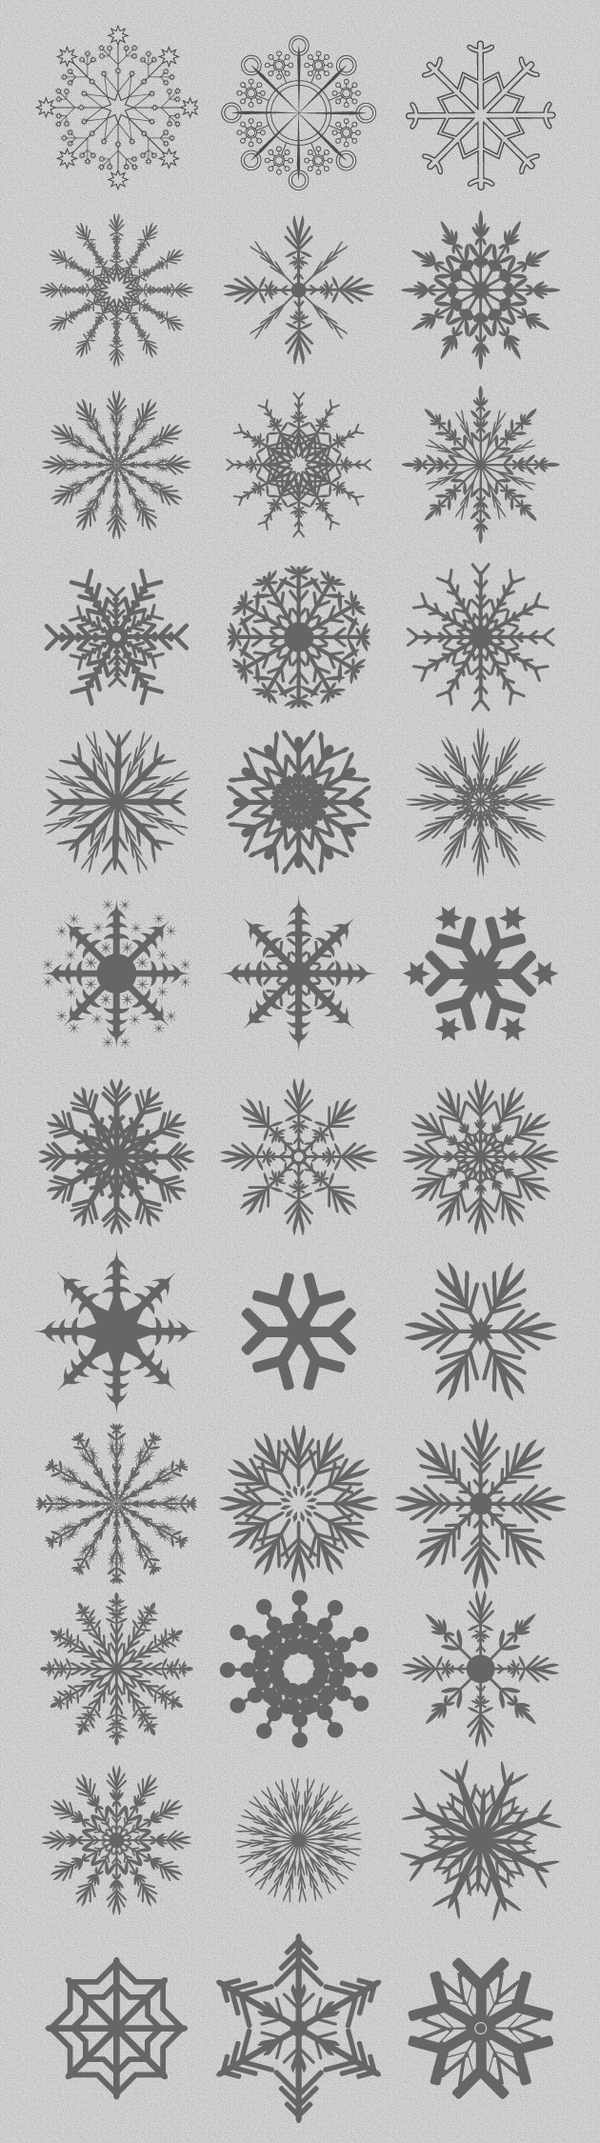 Snowflakes design vector set  